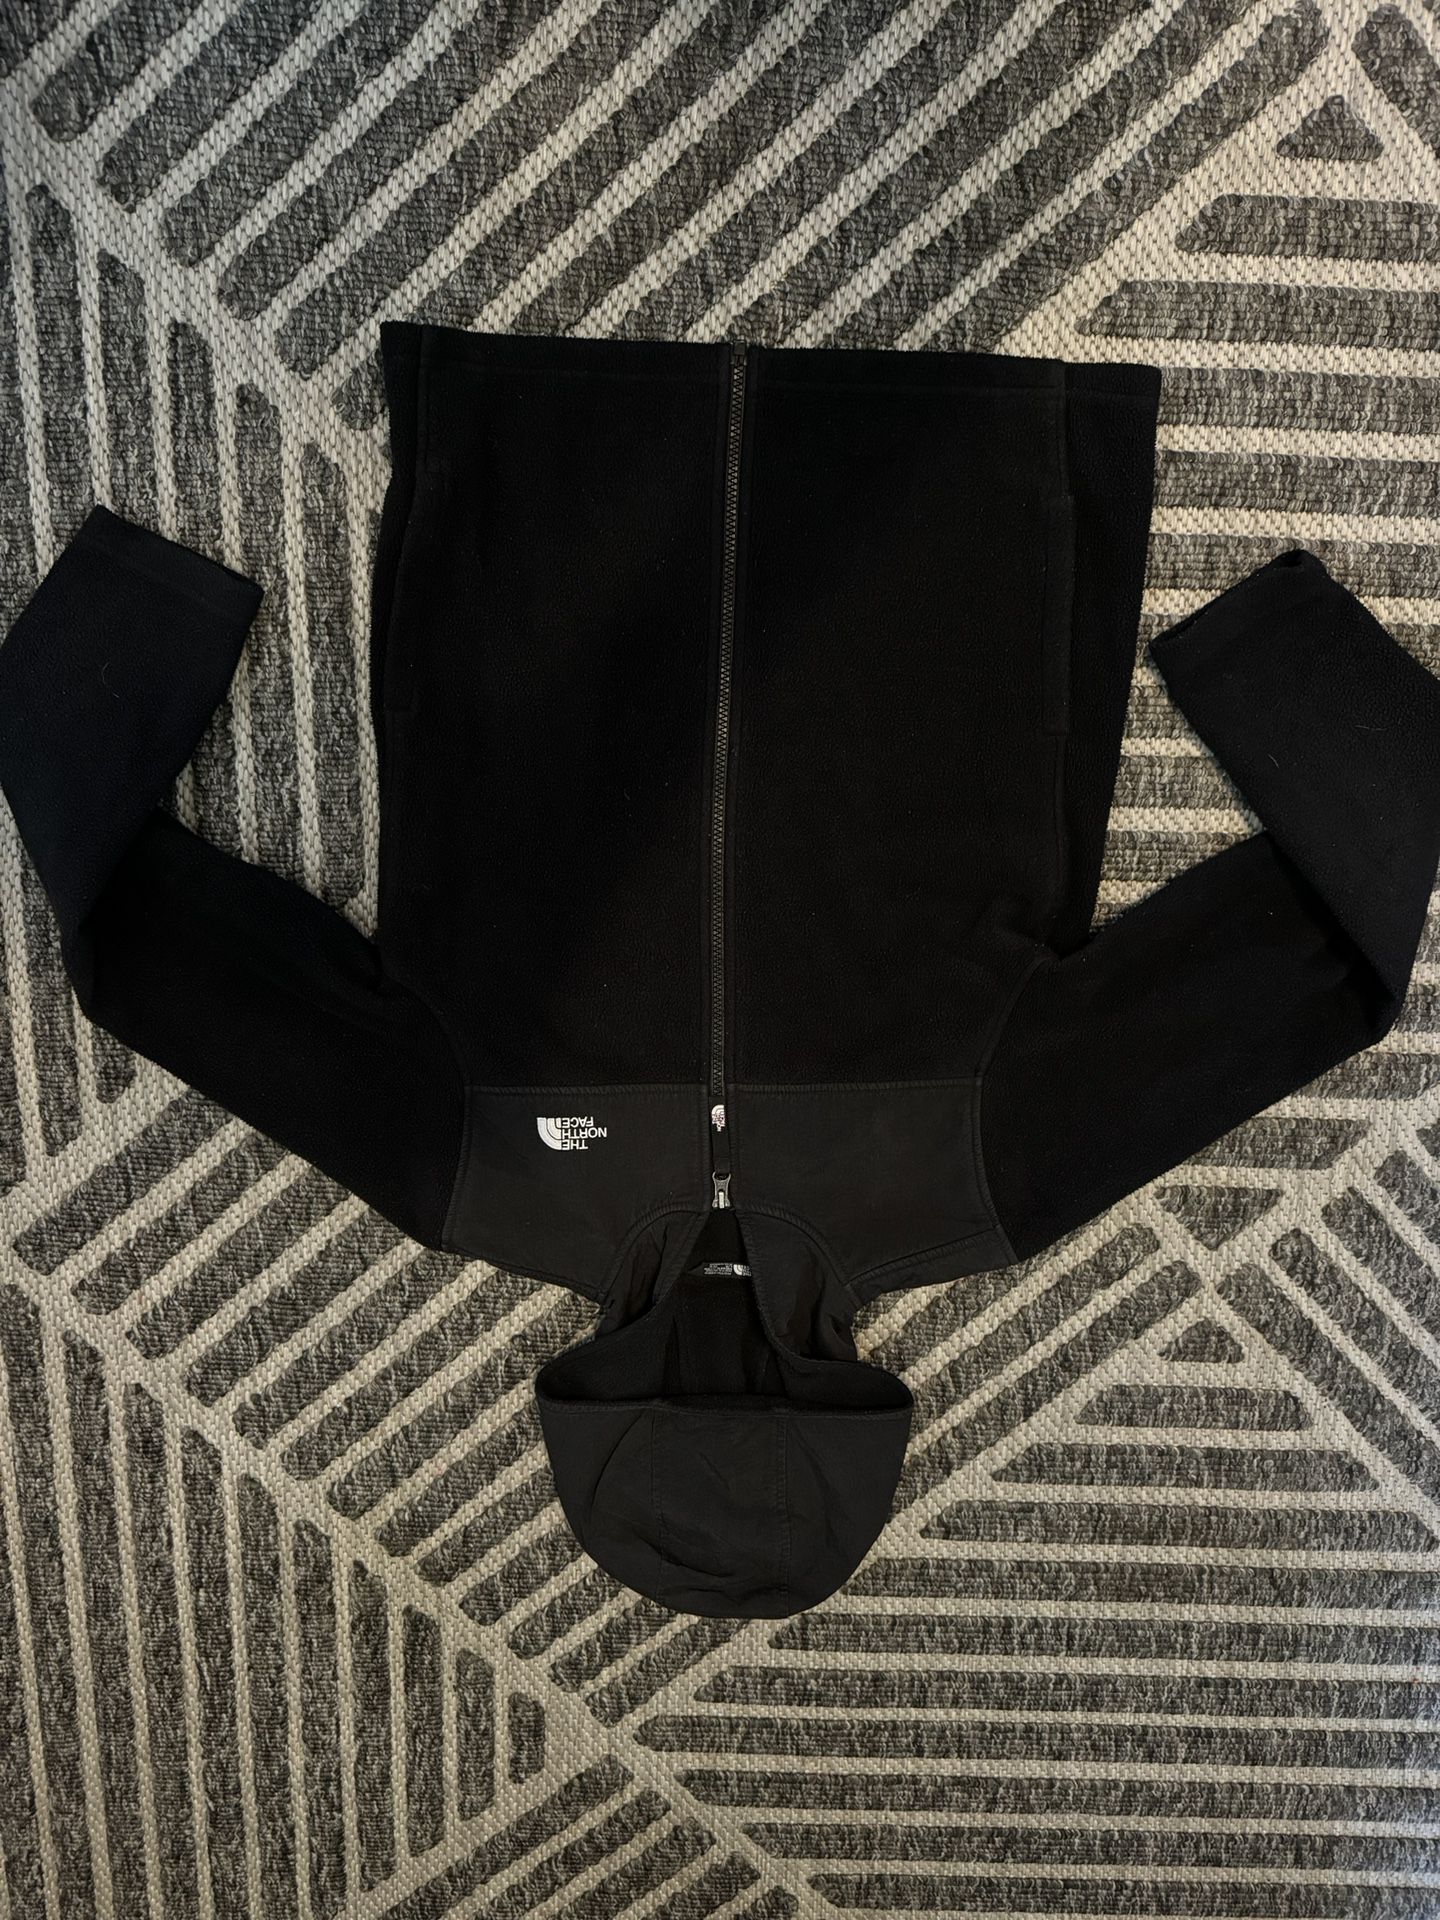 Women’s North Face Jacket (Black) Size Large 